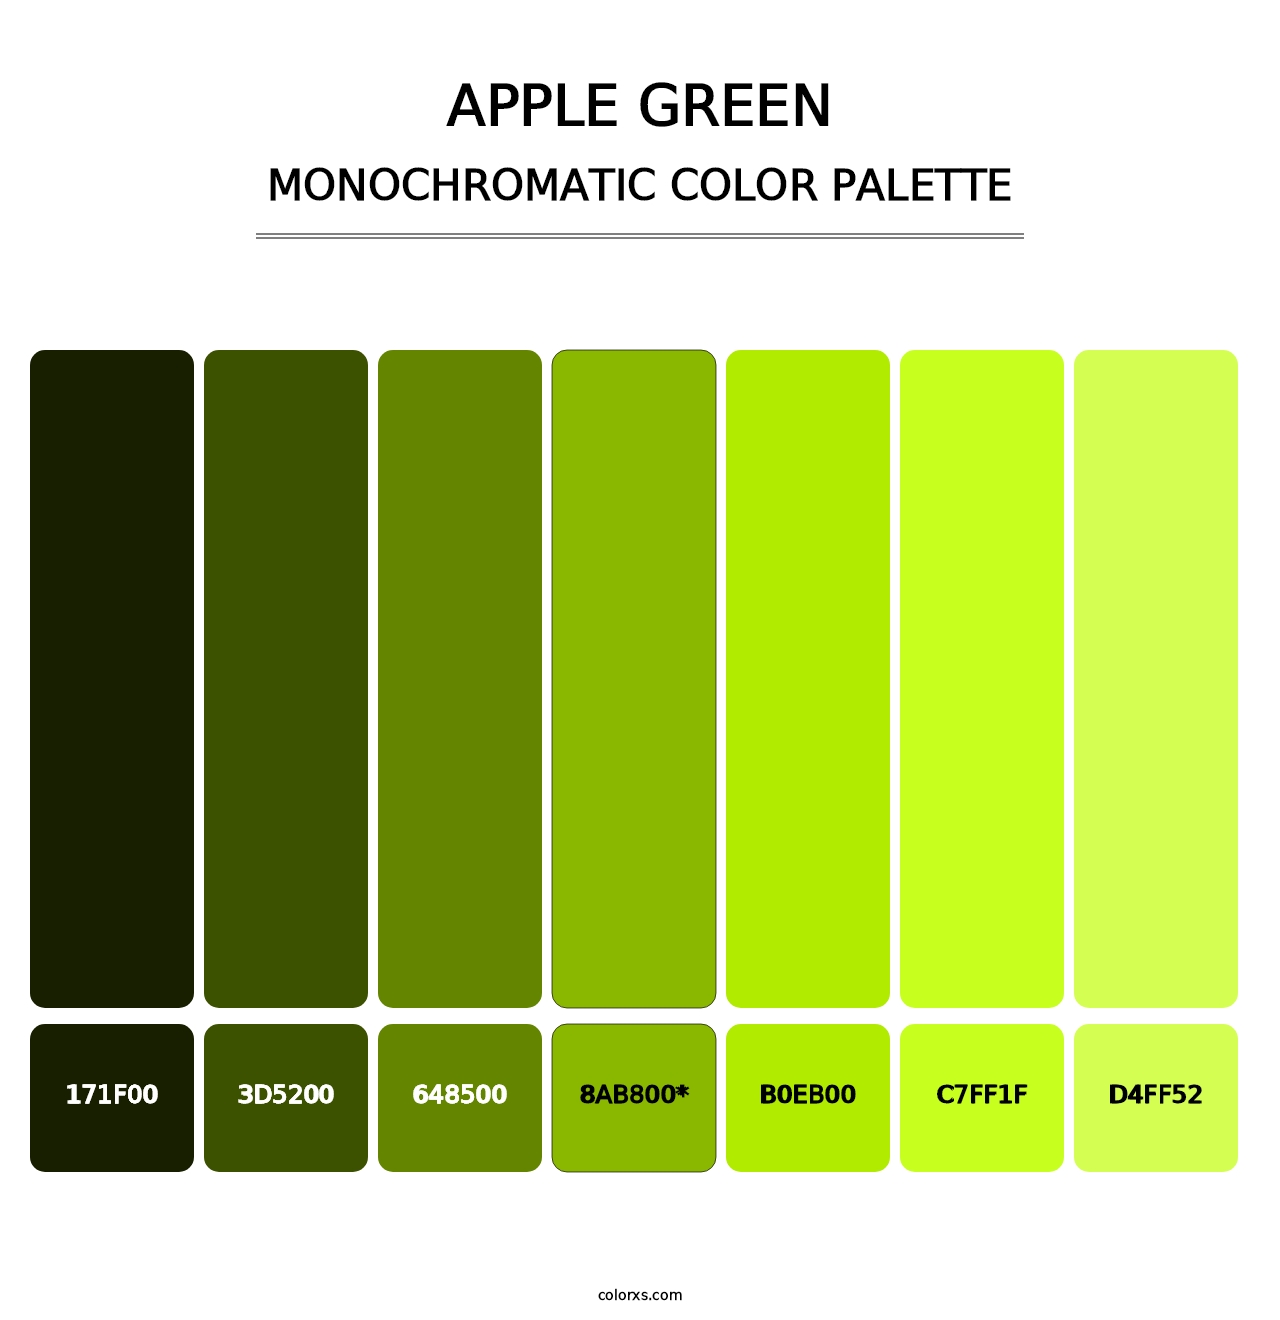 Apple Green - Monochromatic Color Palette